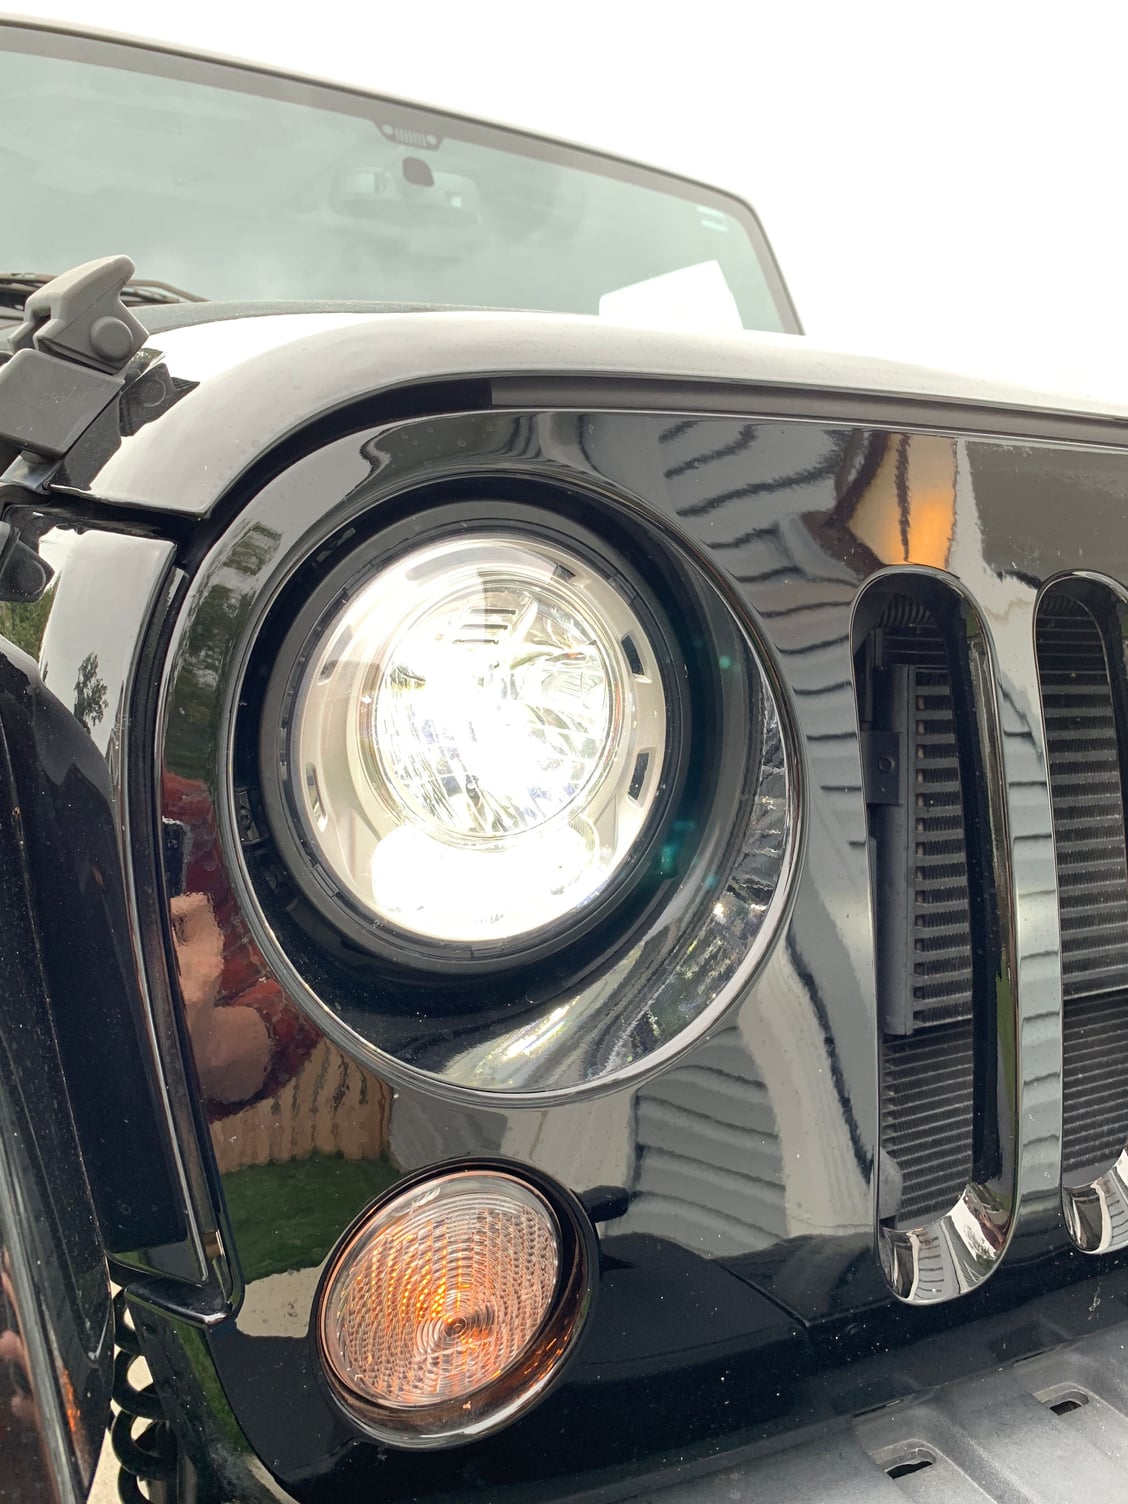 Lights - 2017 Jeep Wranlger Mopar LED Headlights - Used - Christiansburg, VA 24073, United States